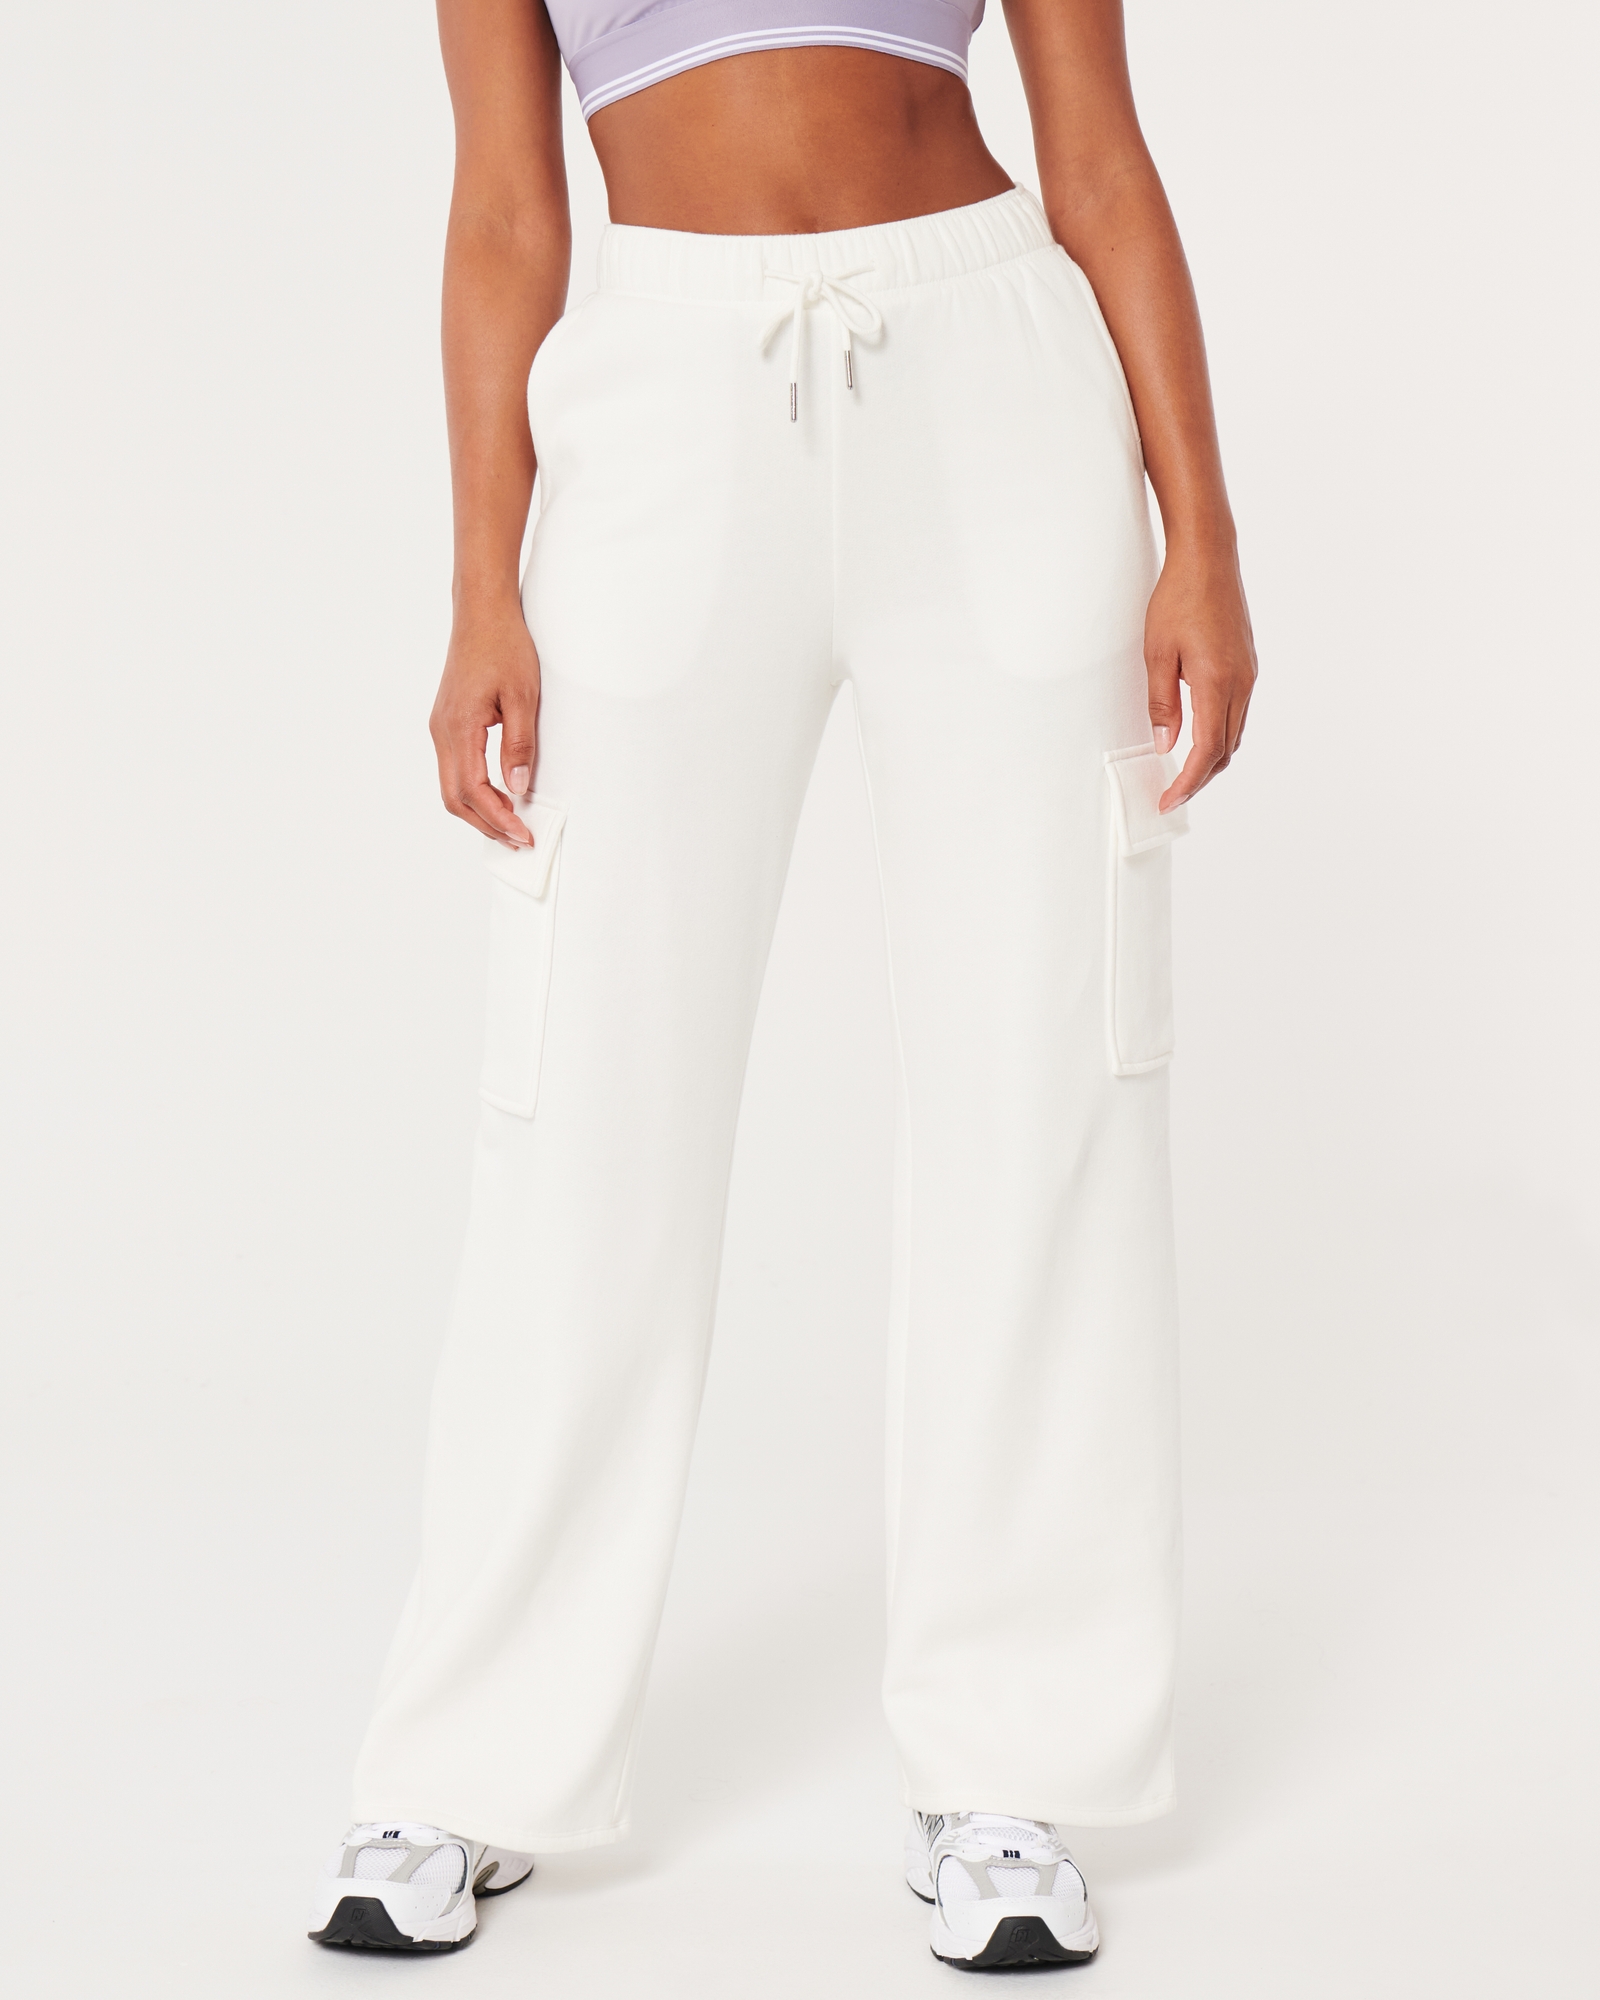 Women's Hollister Sweatpants, size 36 (Grey)